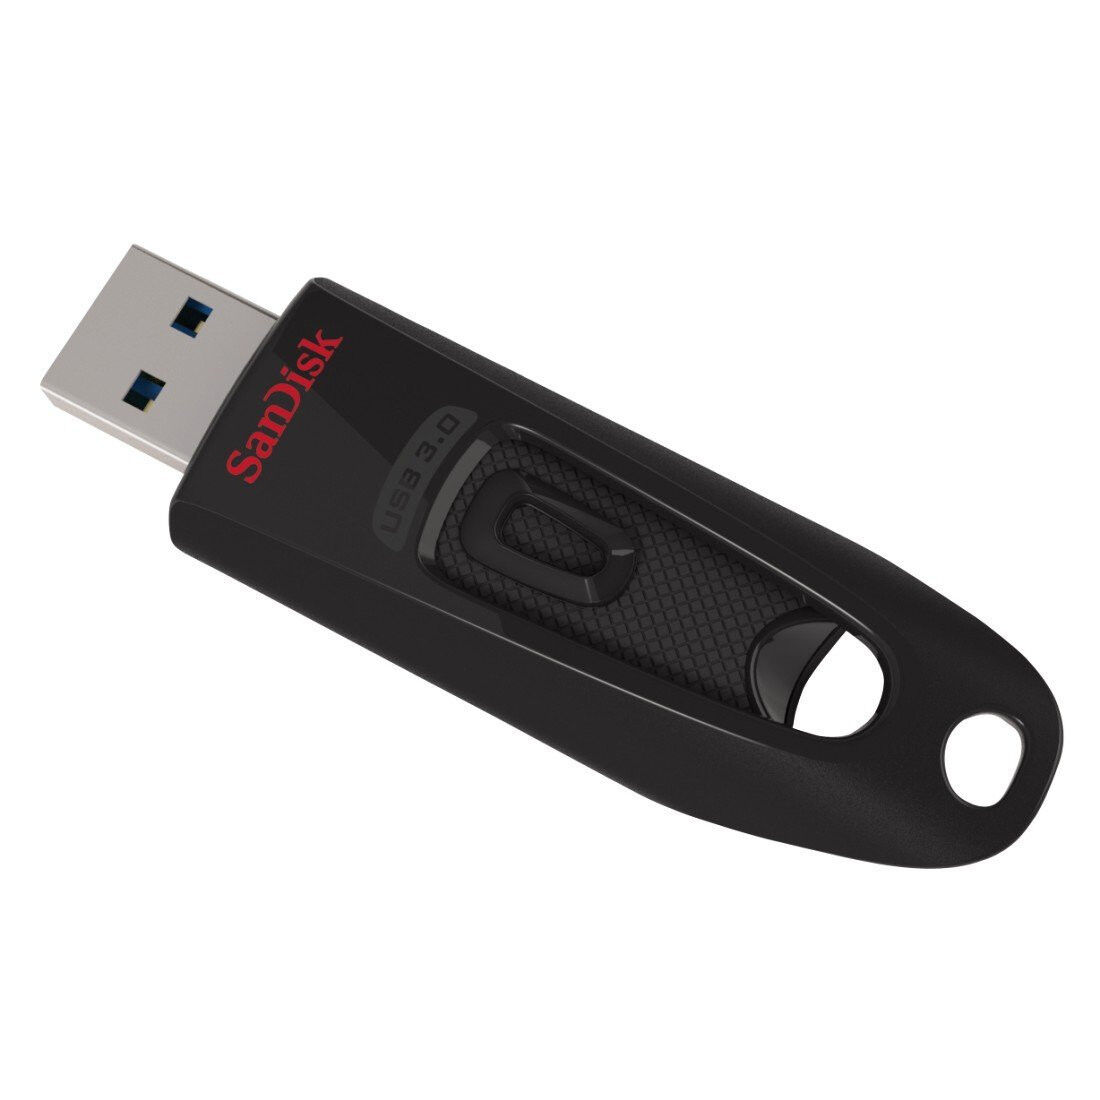 SanDisk Lot of 5 SanDisk 16GB Cruzer Ultra USB 3.0 100MB/s Flash Thumb Drive SDCZ48-016G